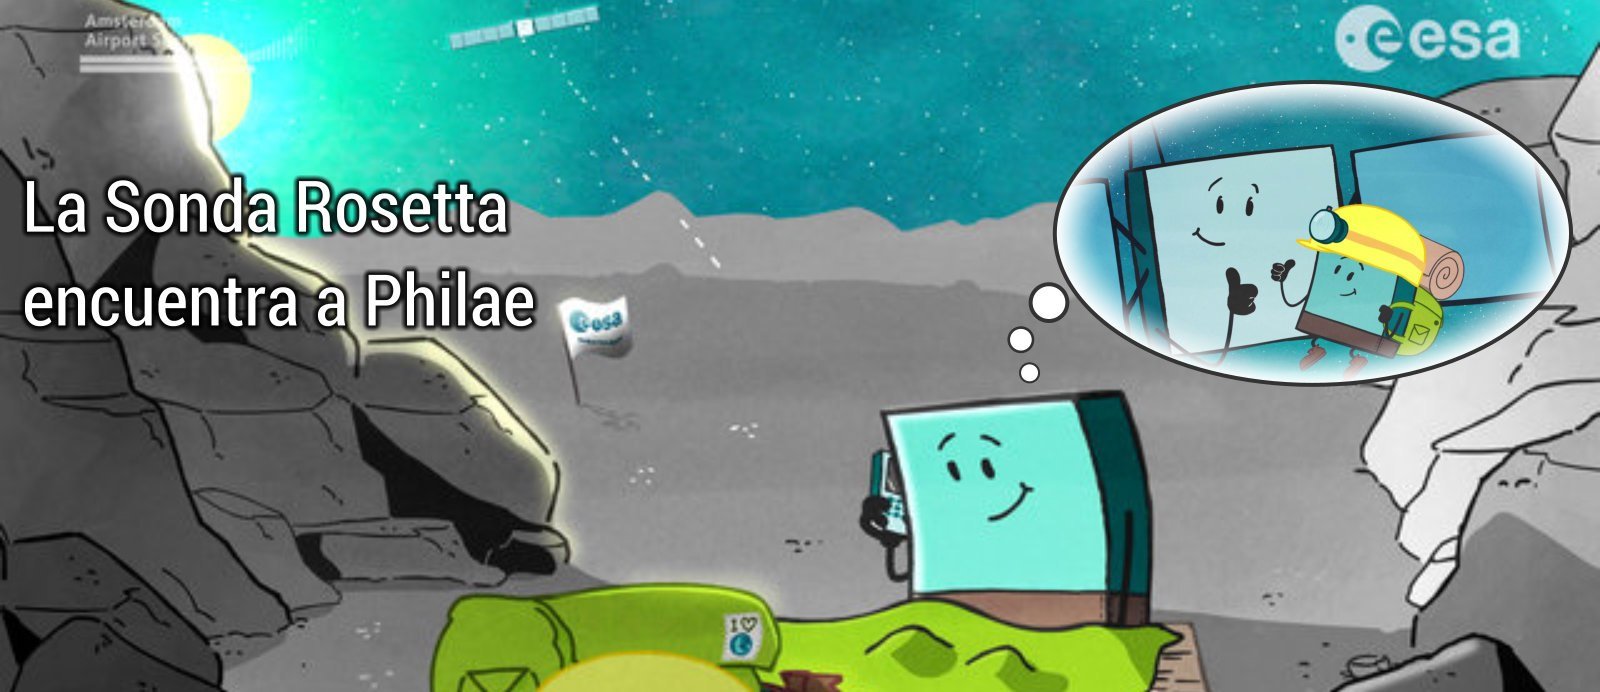 RosettaPhilae E1473105980173, Misterio y Ciencia en Planeta Incógnito: Revista web y podcast